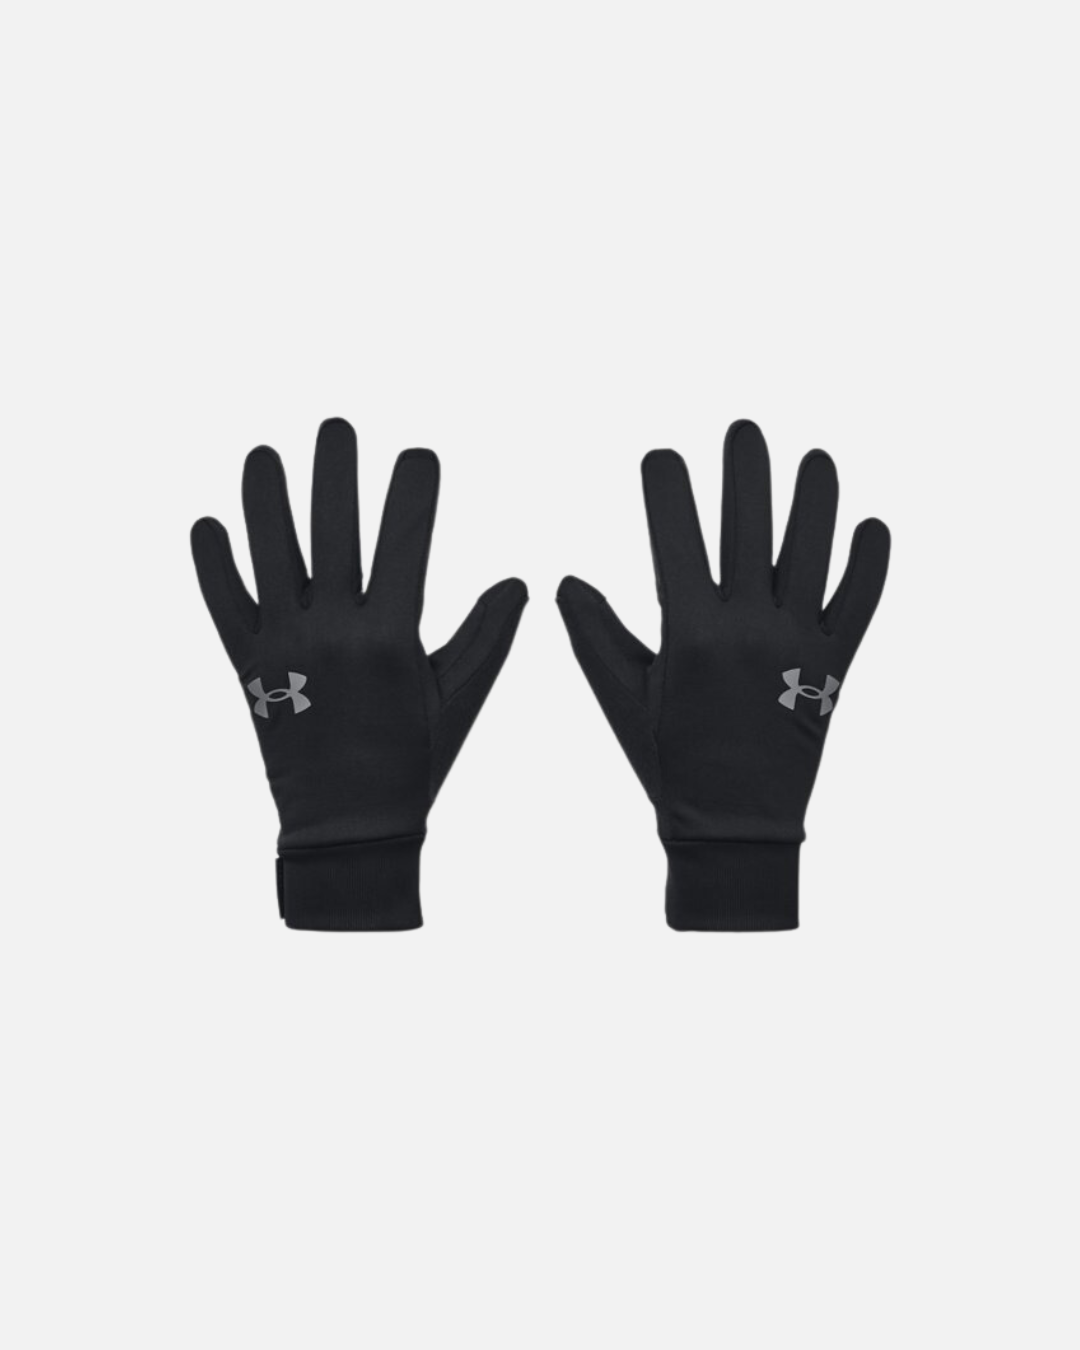 Under Armor Storm Gloves - Black